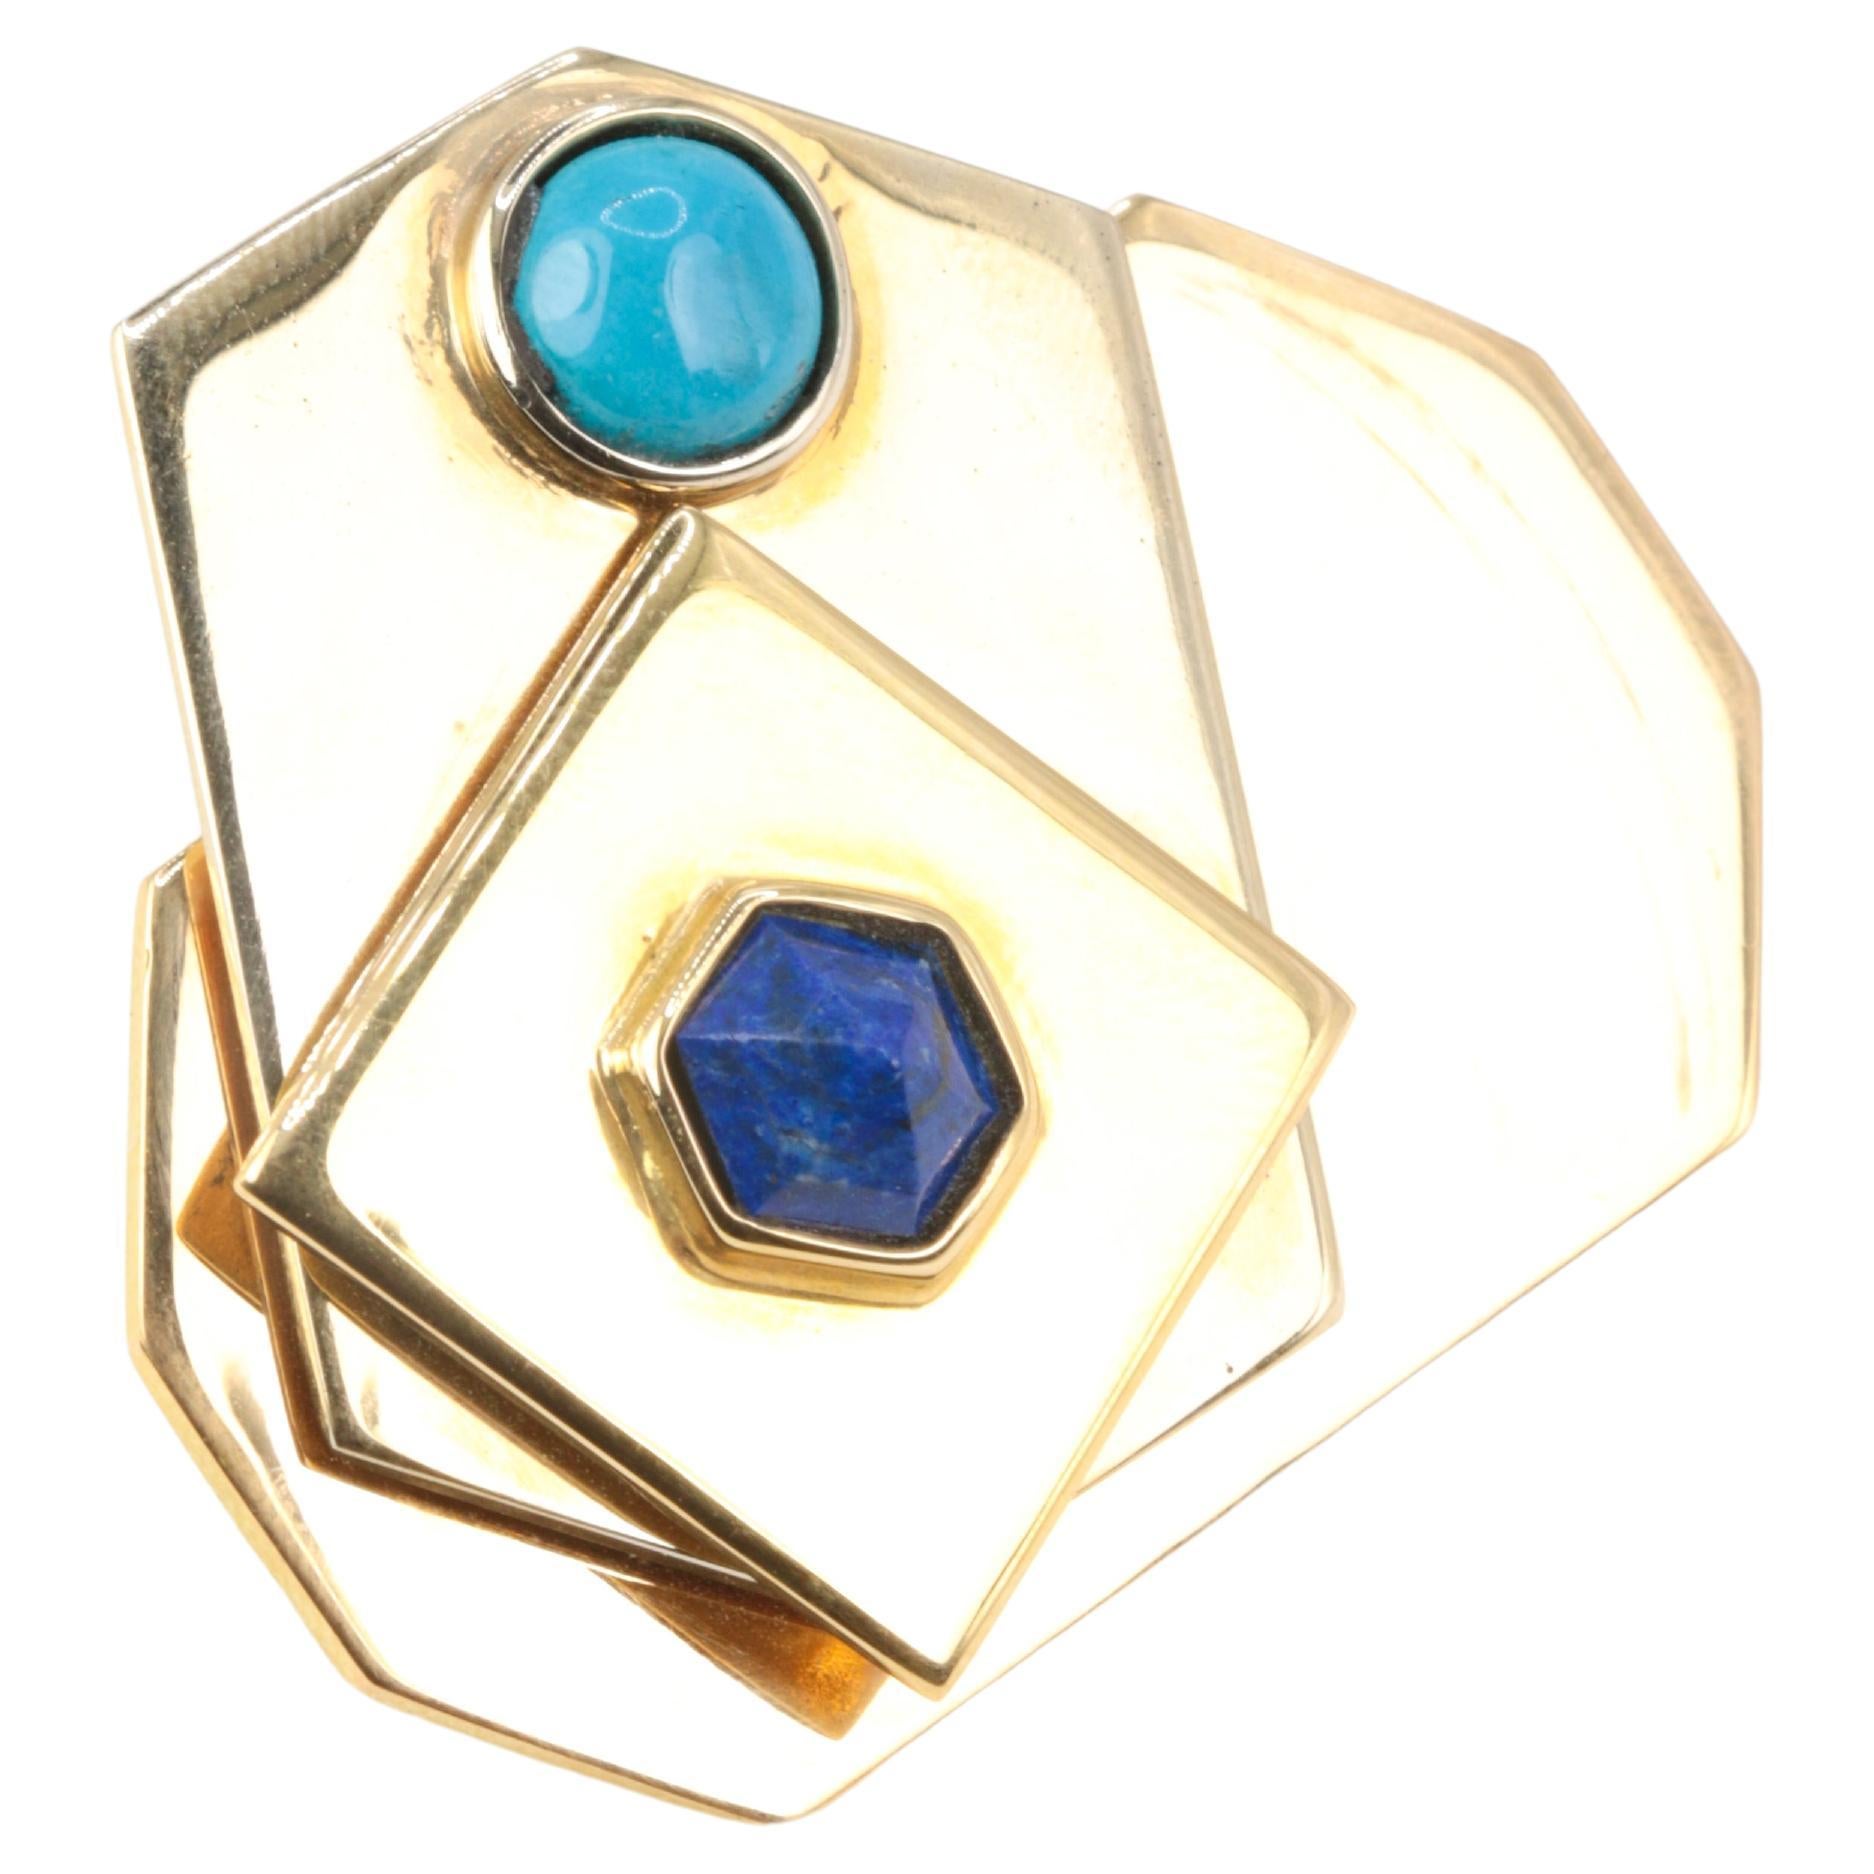 Piero Dorazio Vintage Brooch in Gold, Turquoise and Lapis Lazuli - Artcurial Edi For Sale